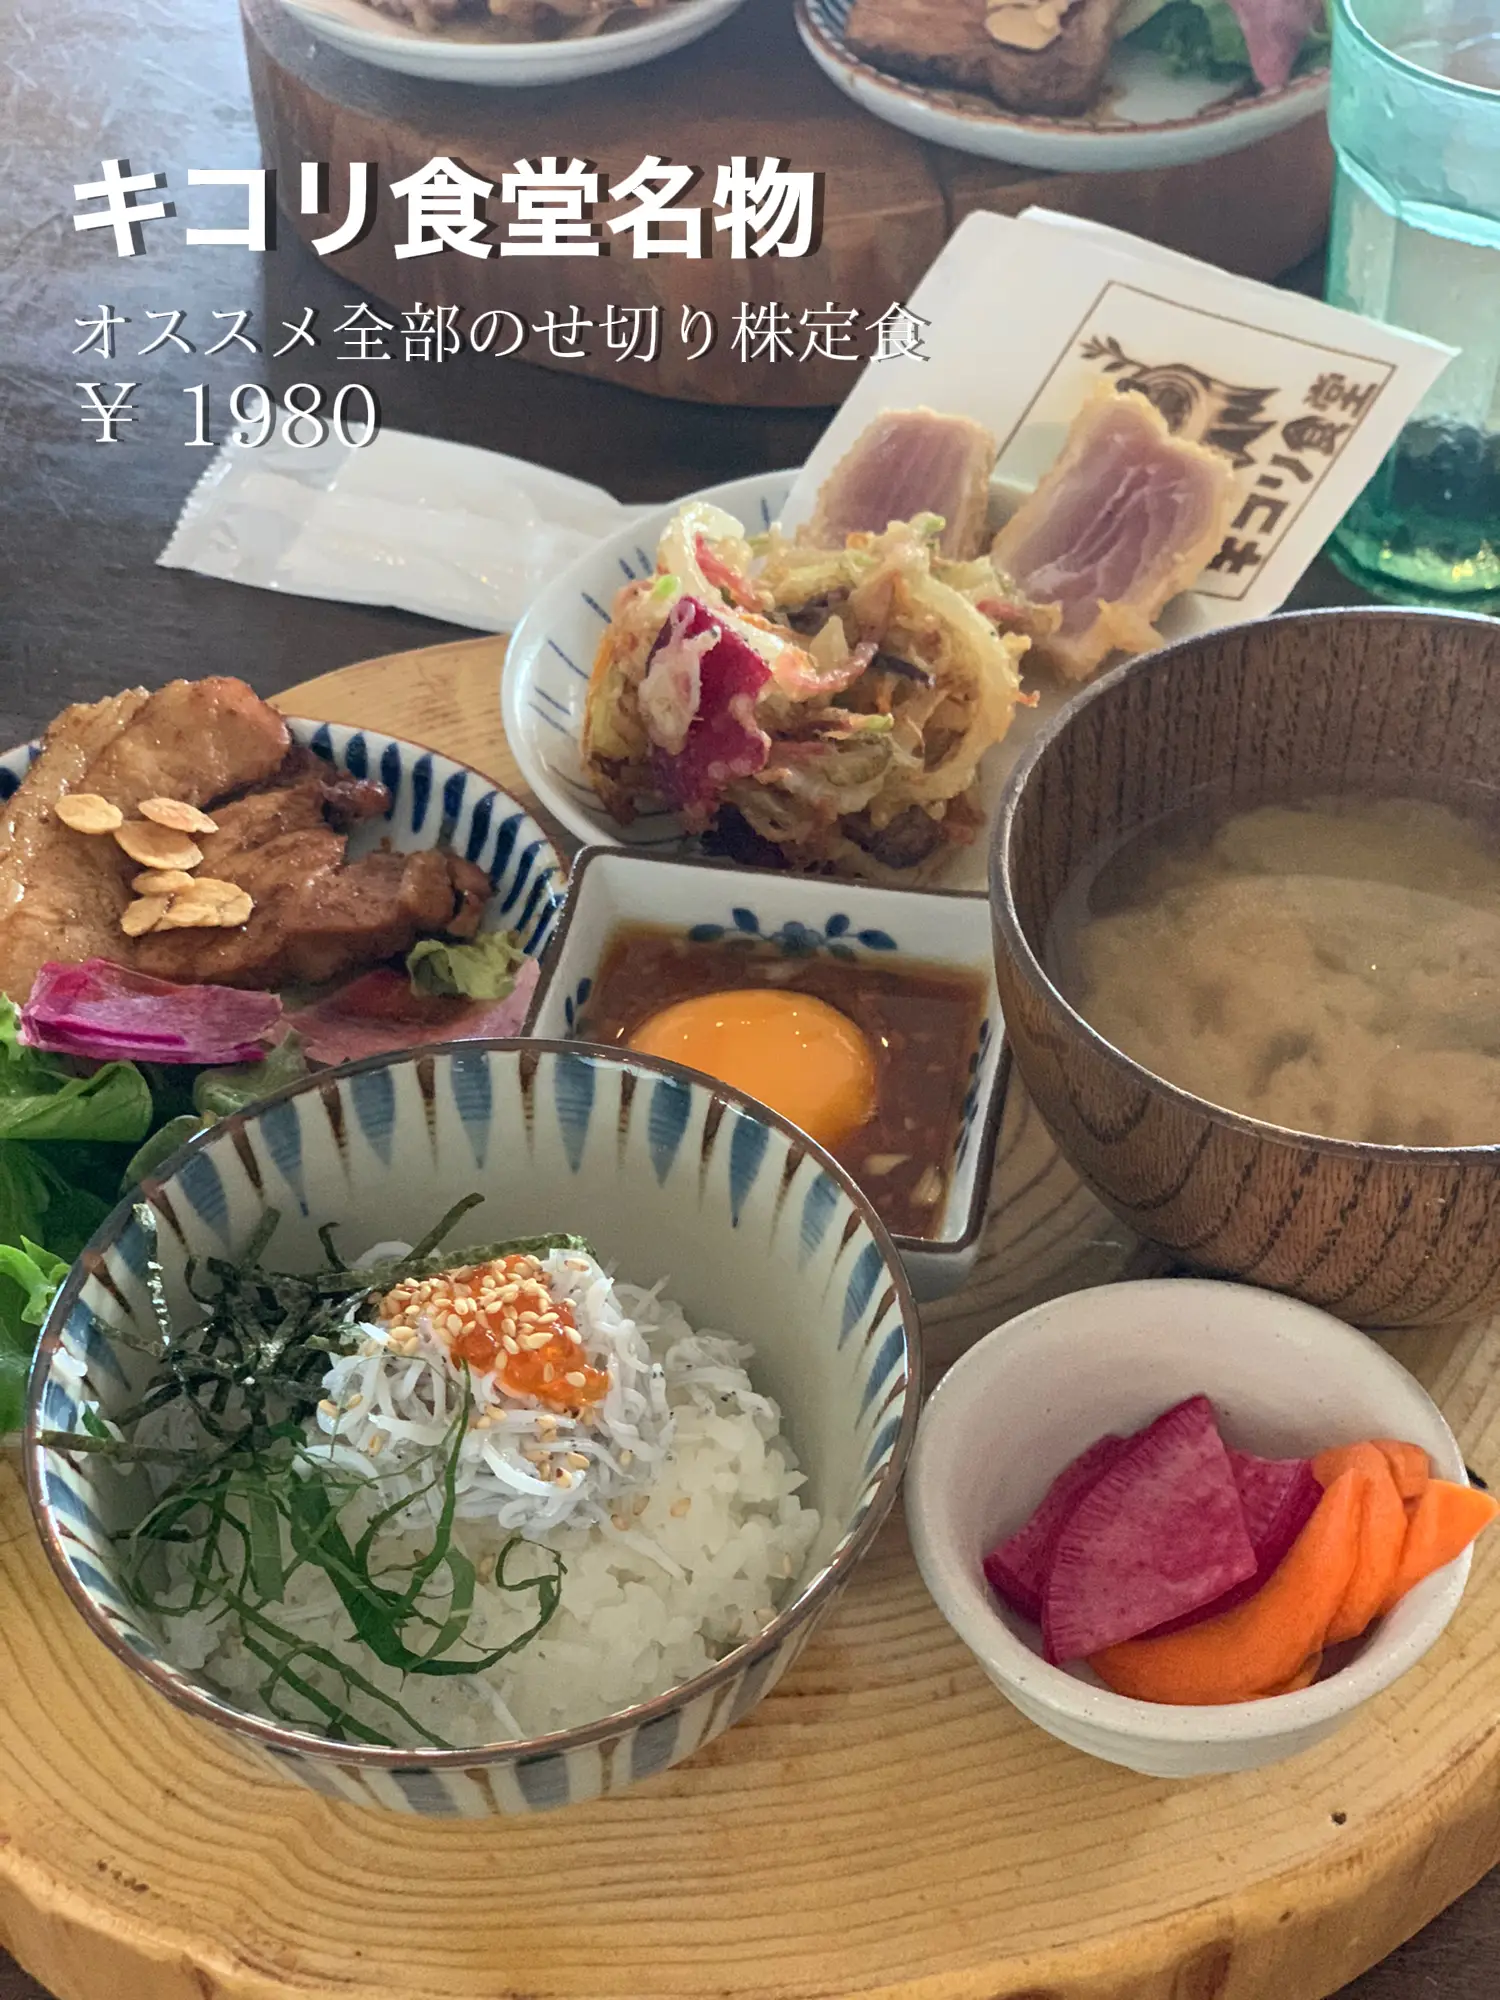 Kamakura] Gourmet Kikori restaurant by the sea | Gallery posted by kana:e |  Lemon8